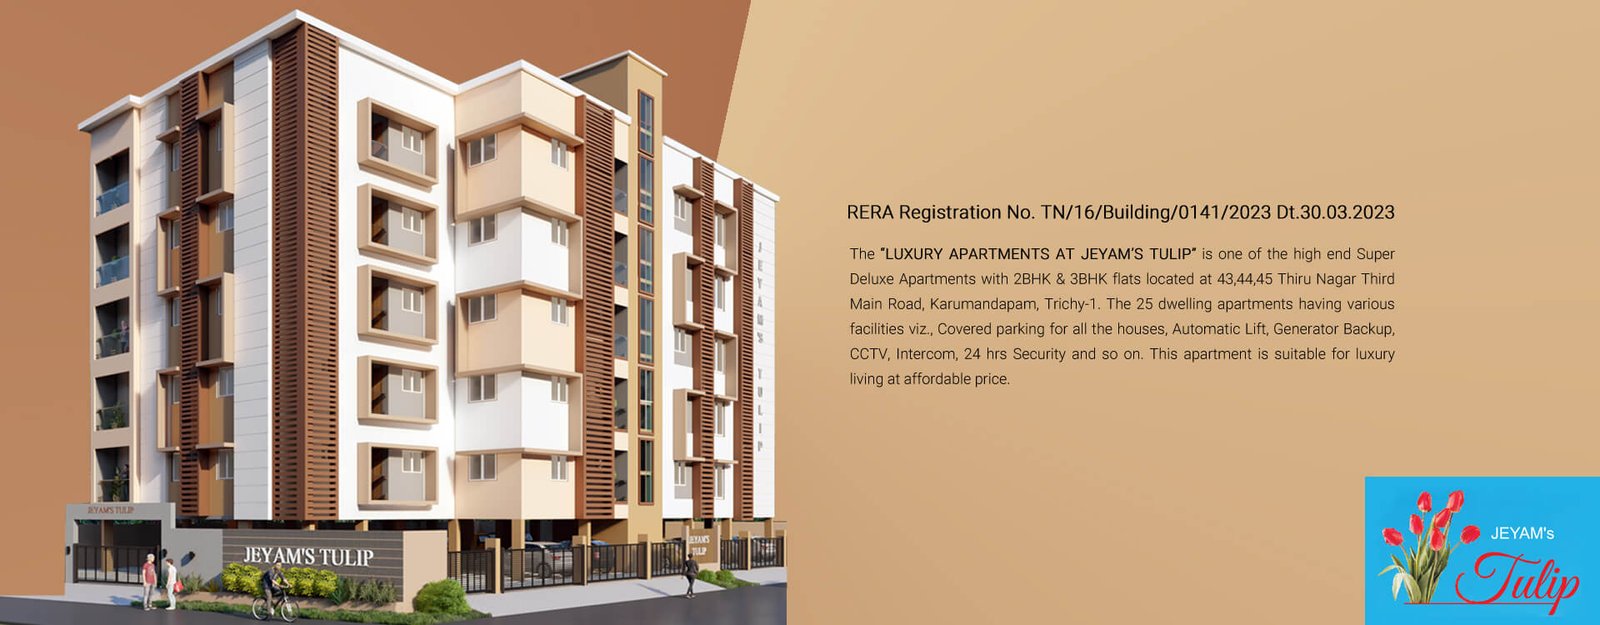 Jeyam Tulip - Deluxe Apartments - 2BHK & 3BHK Flats - Karumandapam - Trichy - Jeyam Builders